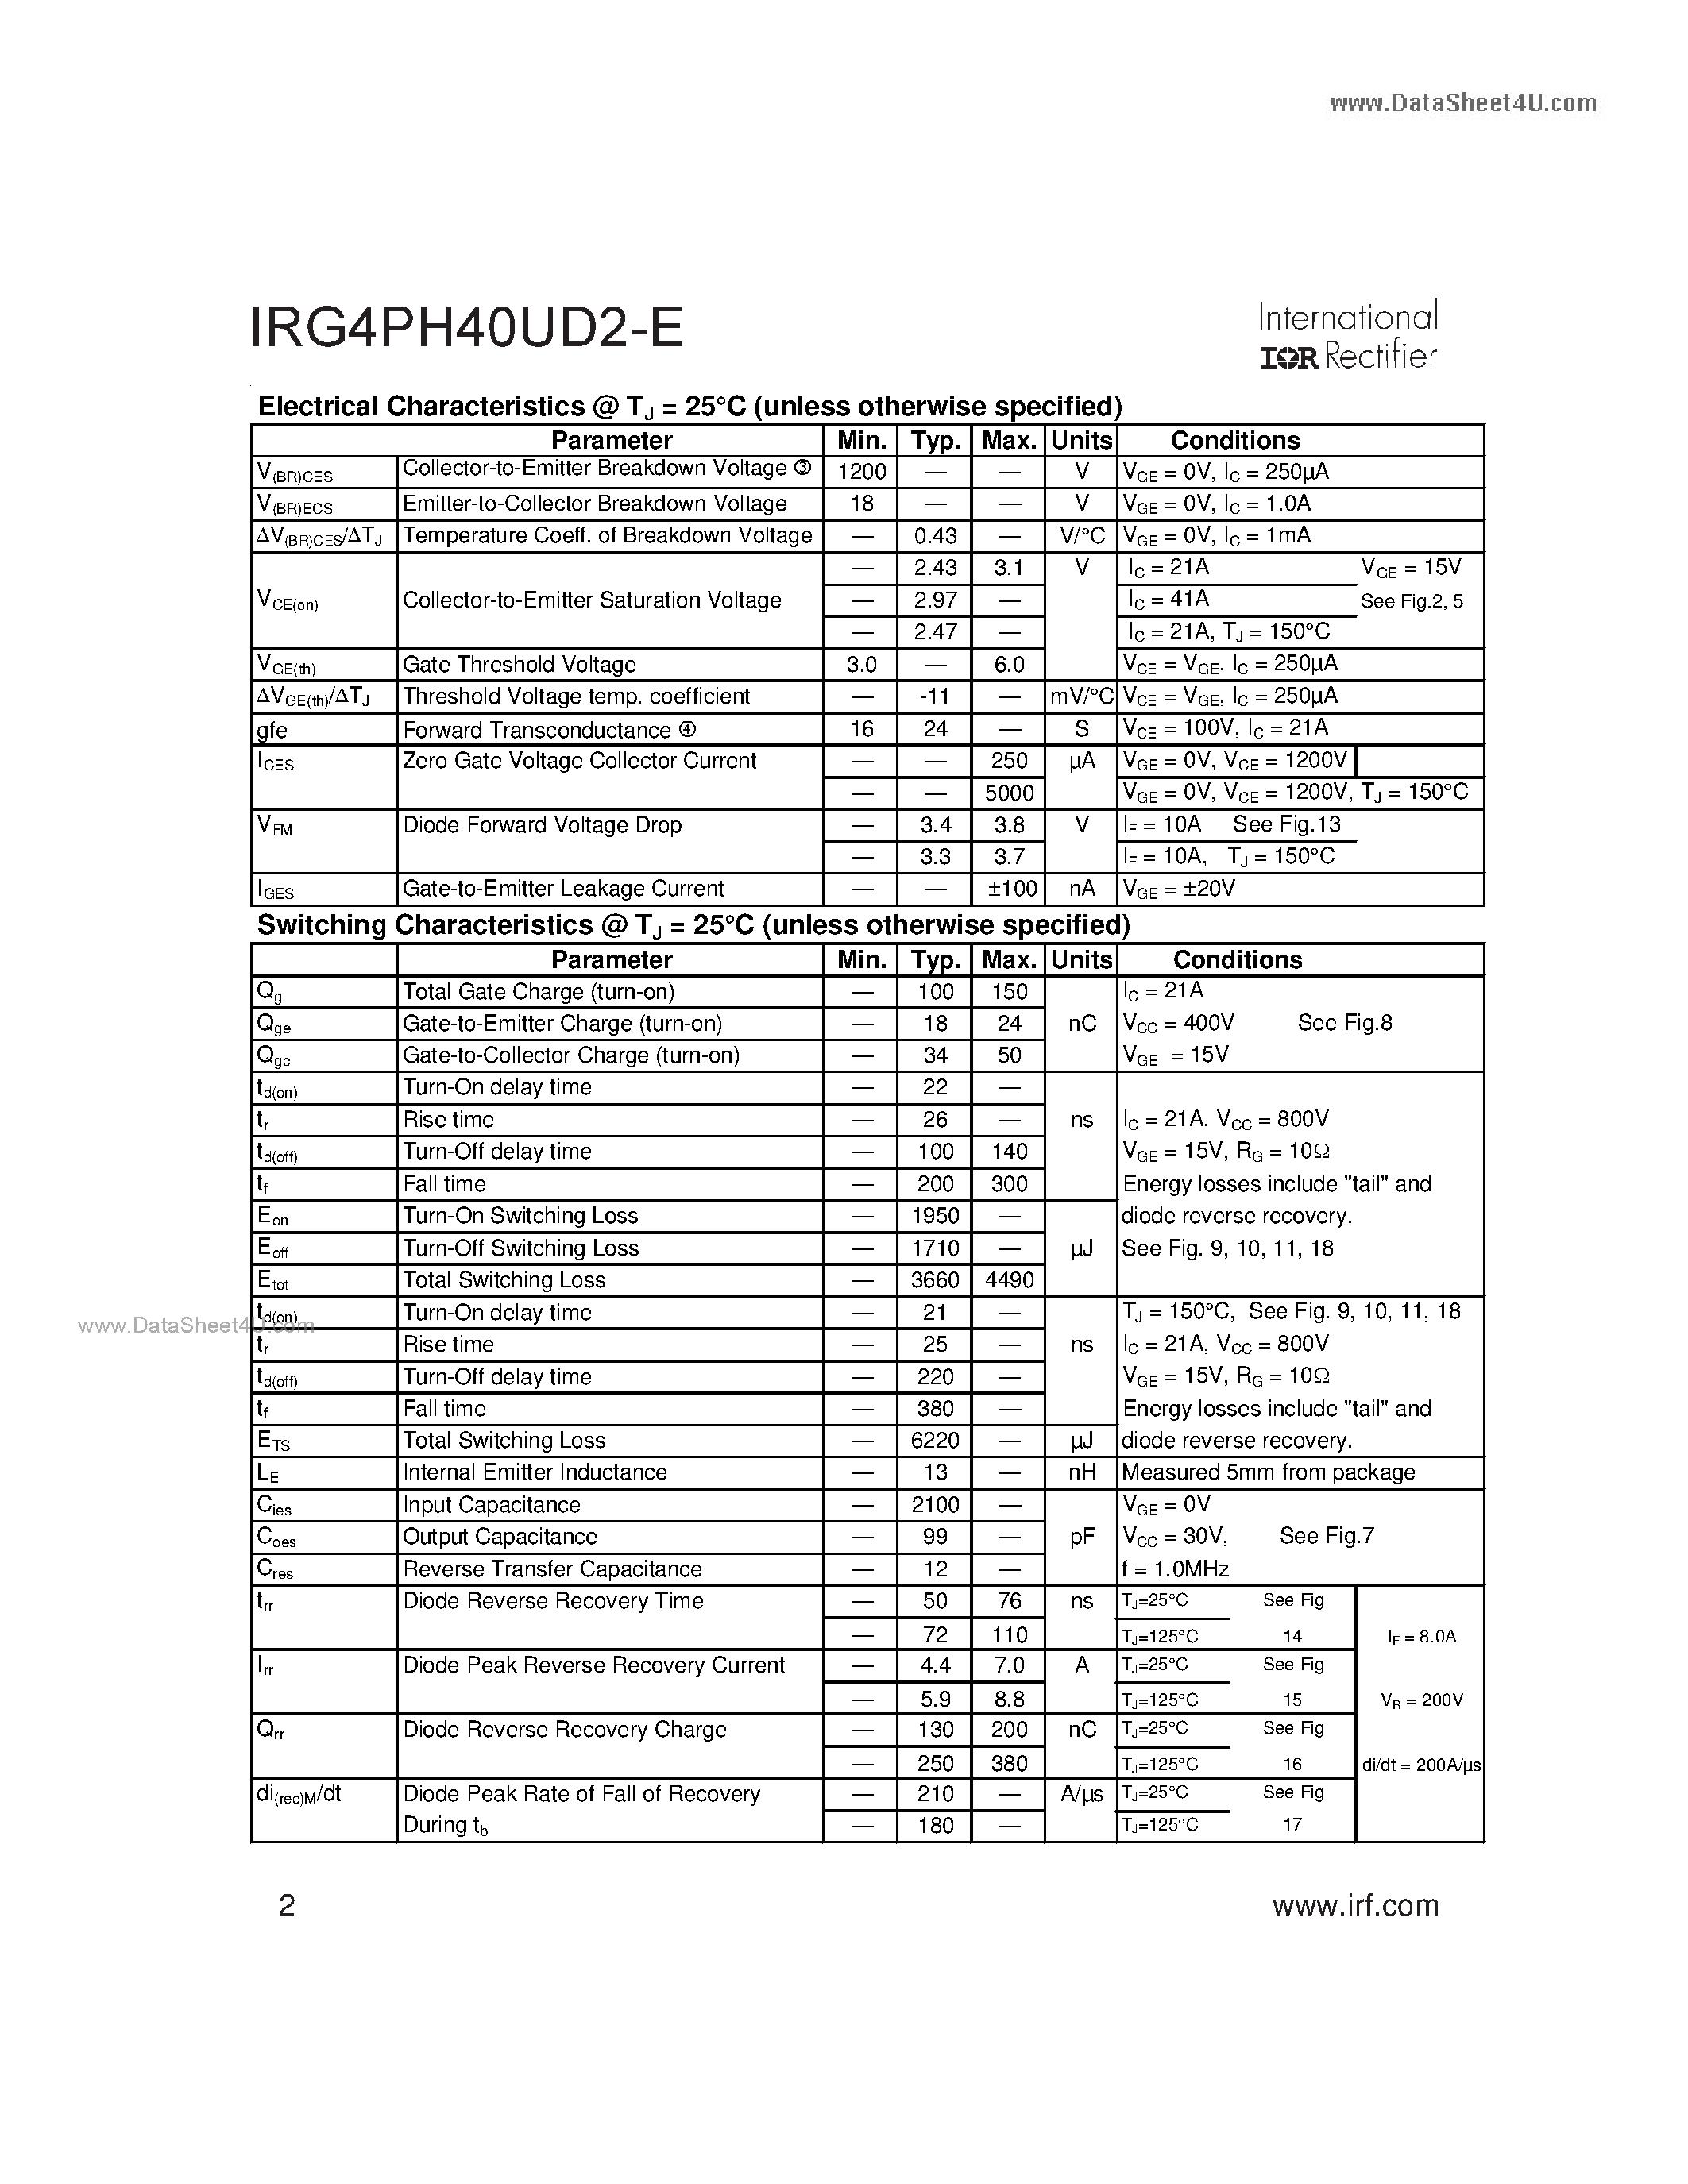 Datasheet G4PH40UD2-E - Search -----> IRG4PH40UD2-E page 2